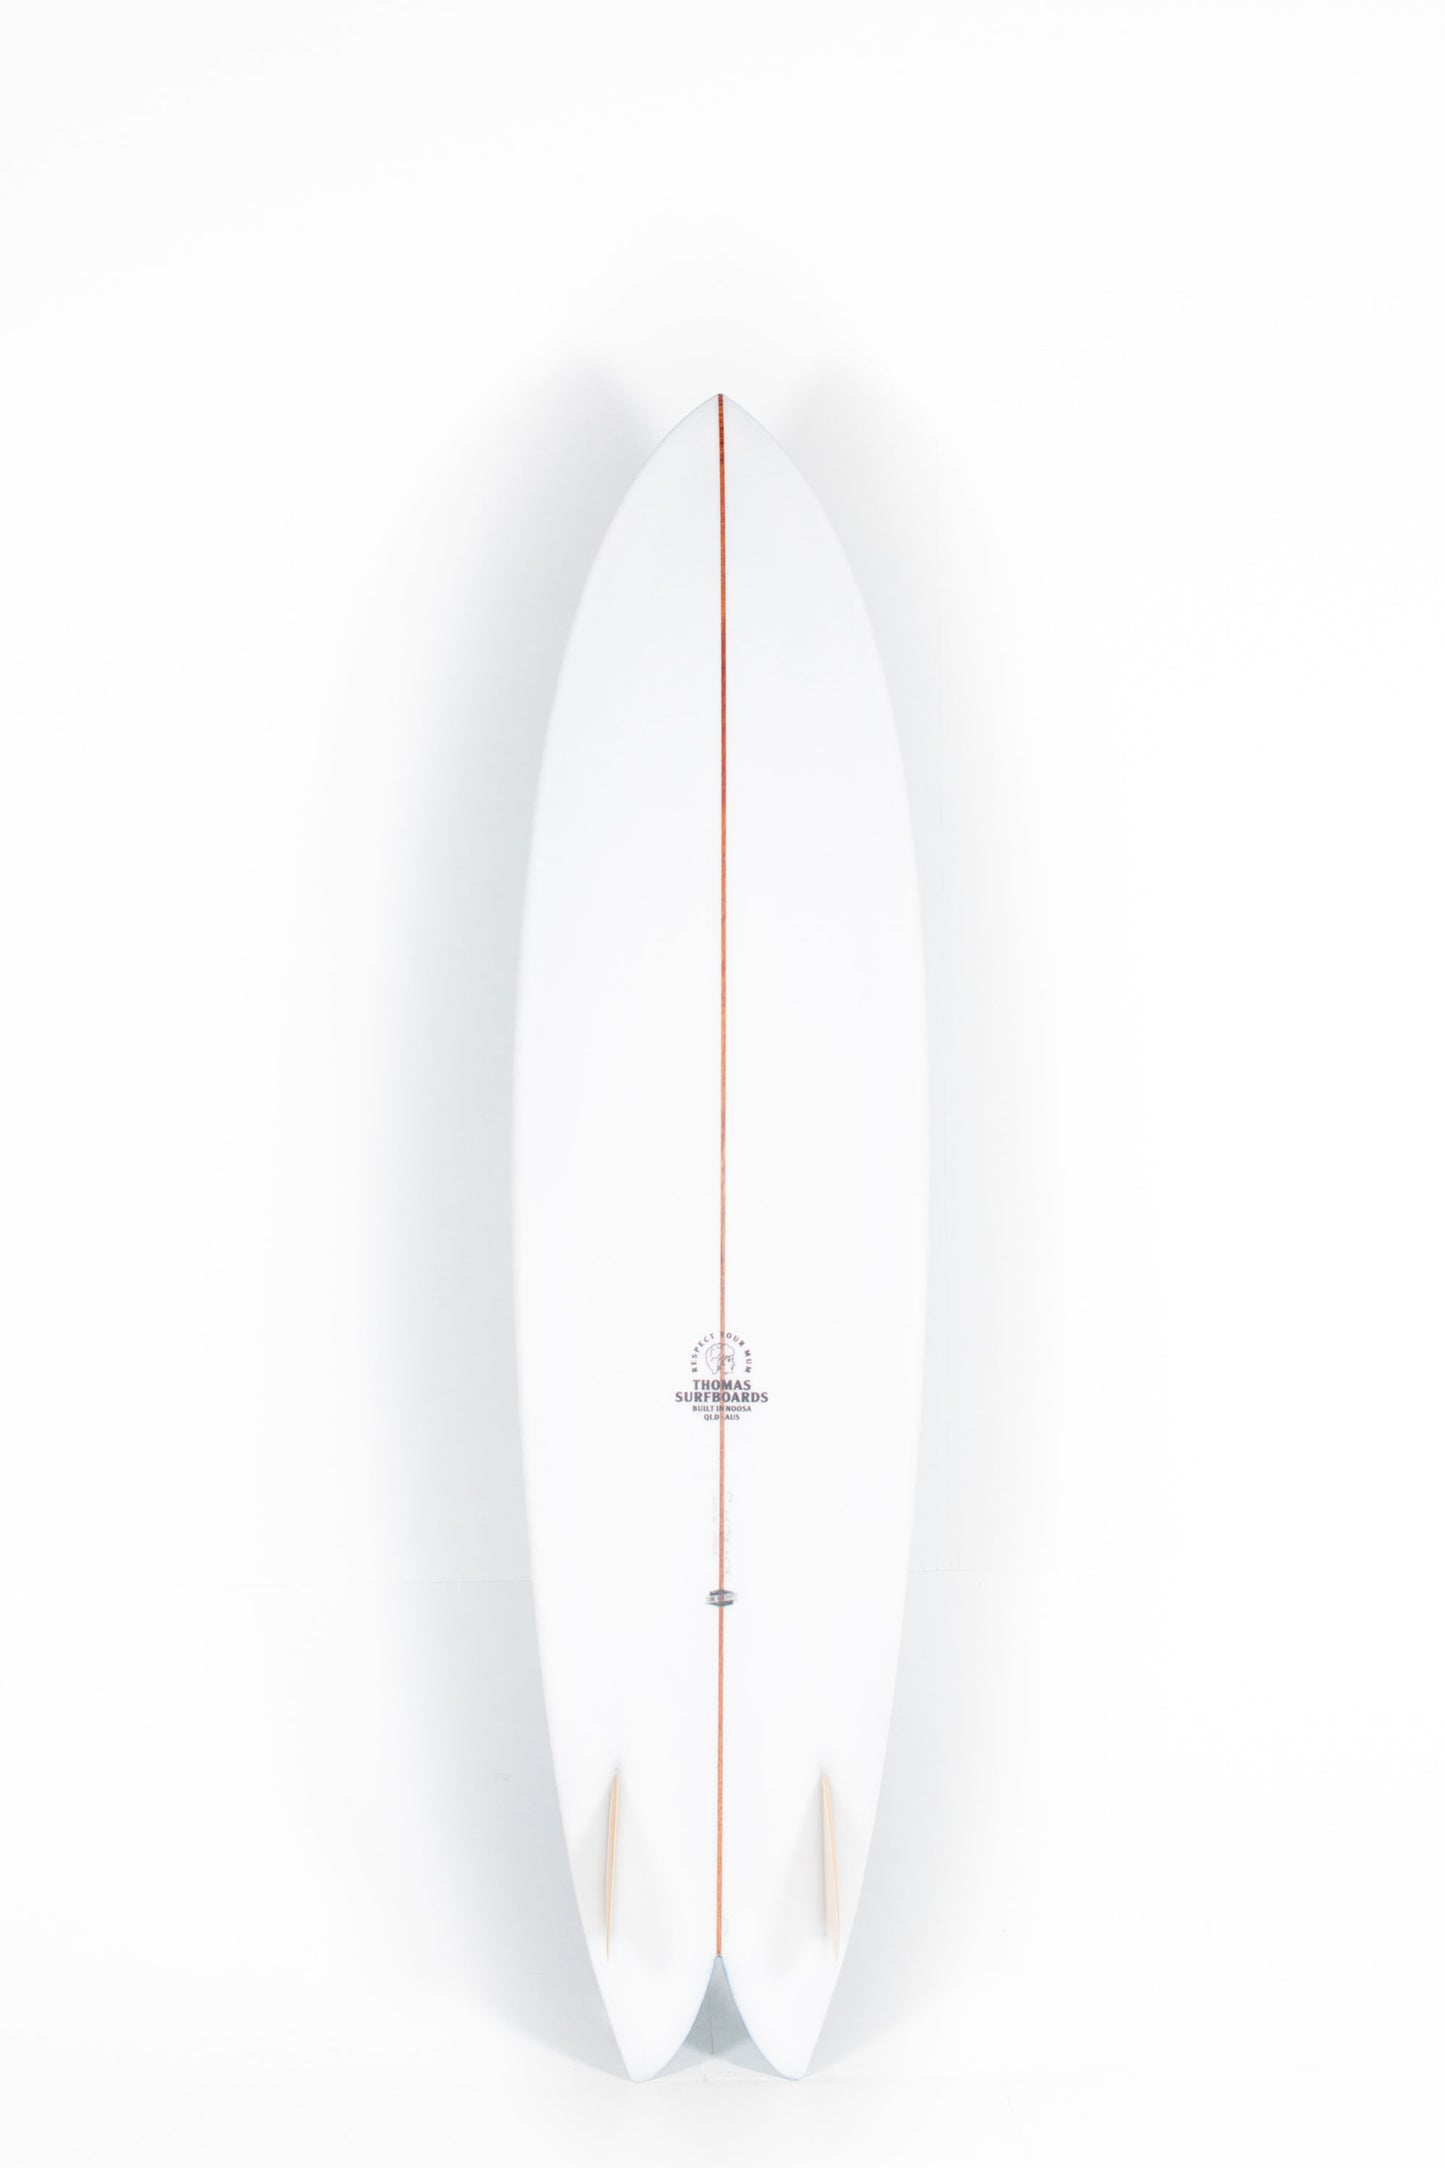 Pukas Surf Shop - Thomas Surfboards - LONG FISH - 7'4"x 21 5/8 x 2 3/4 - Ref. LONGFISH74